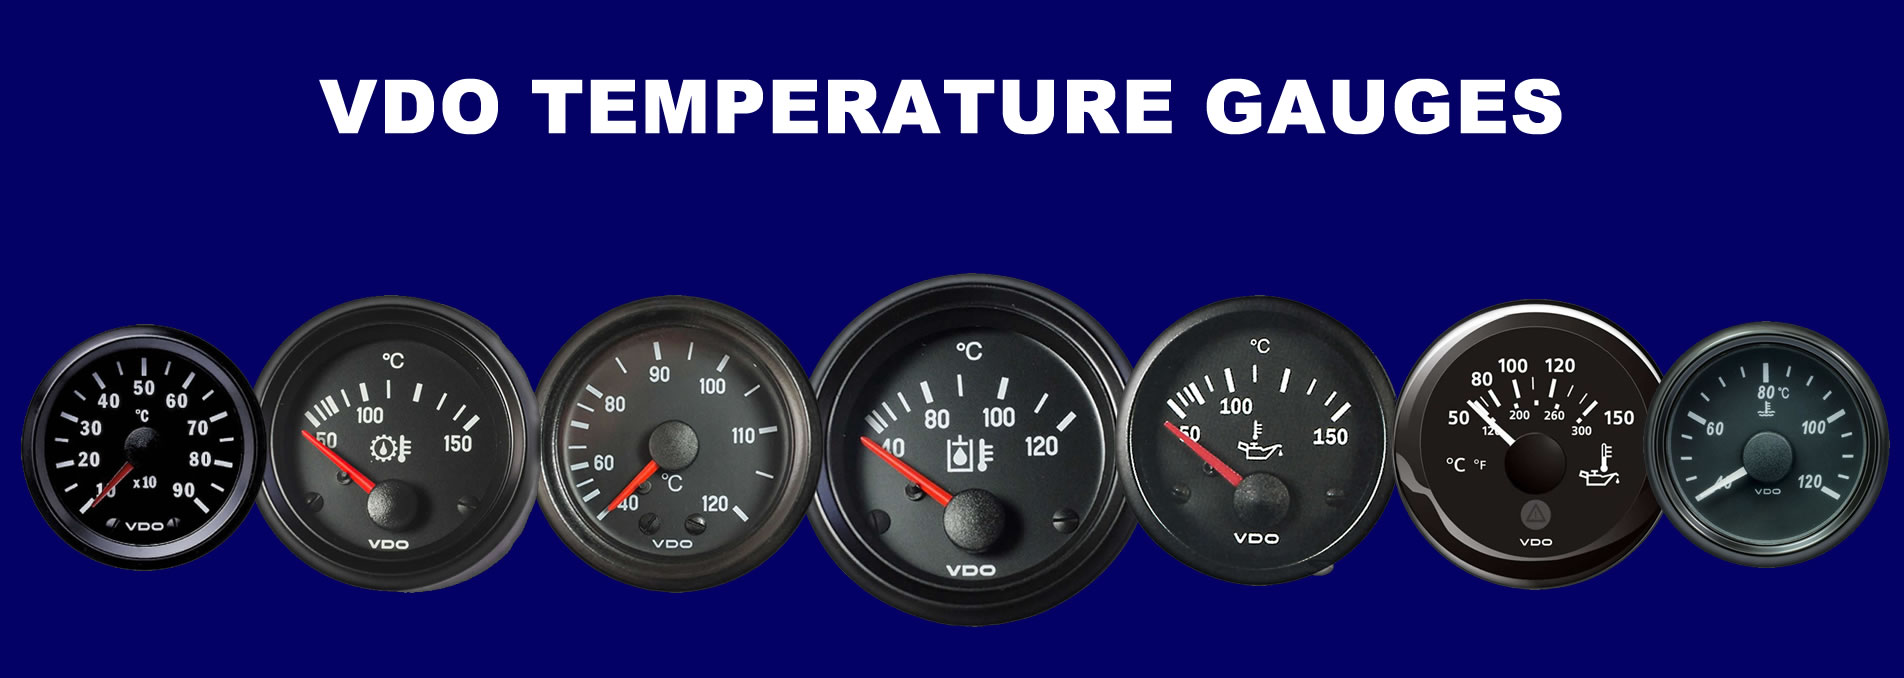 VDO temperature gauges banner